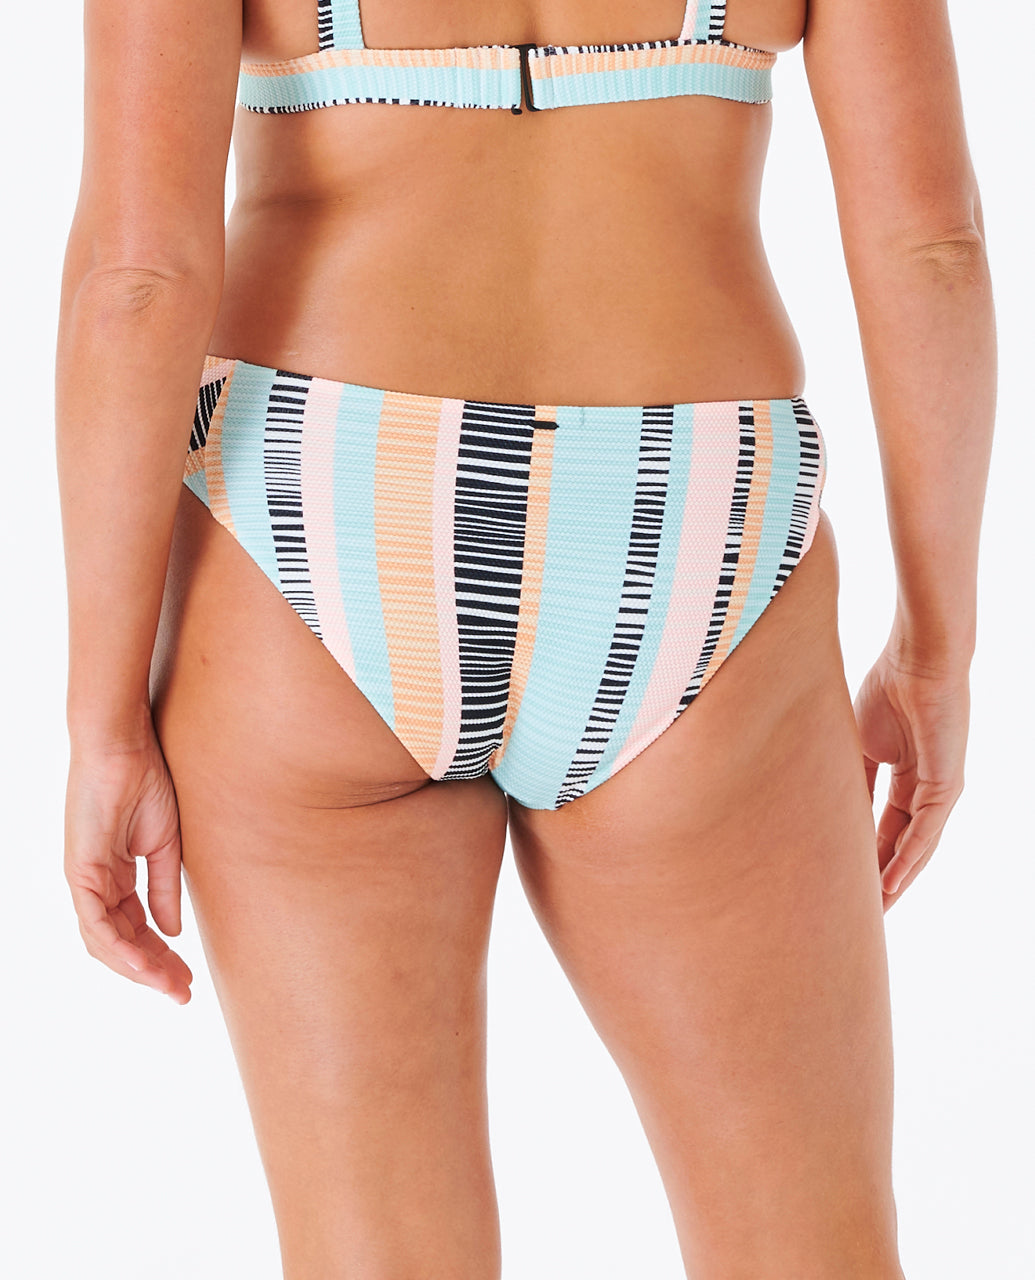 [SALE] Women's RIPPLE EFFECT FULL PANT Bikini Set Bottoms